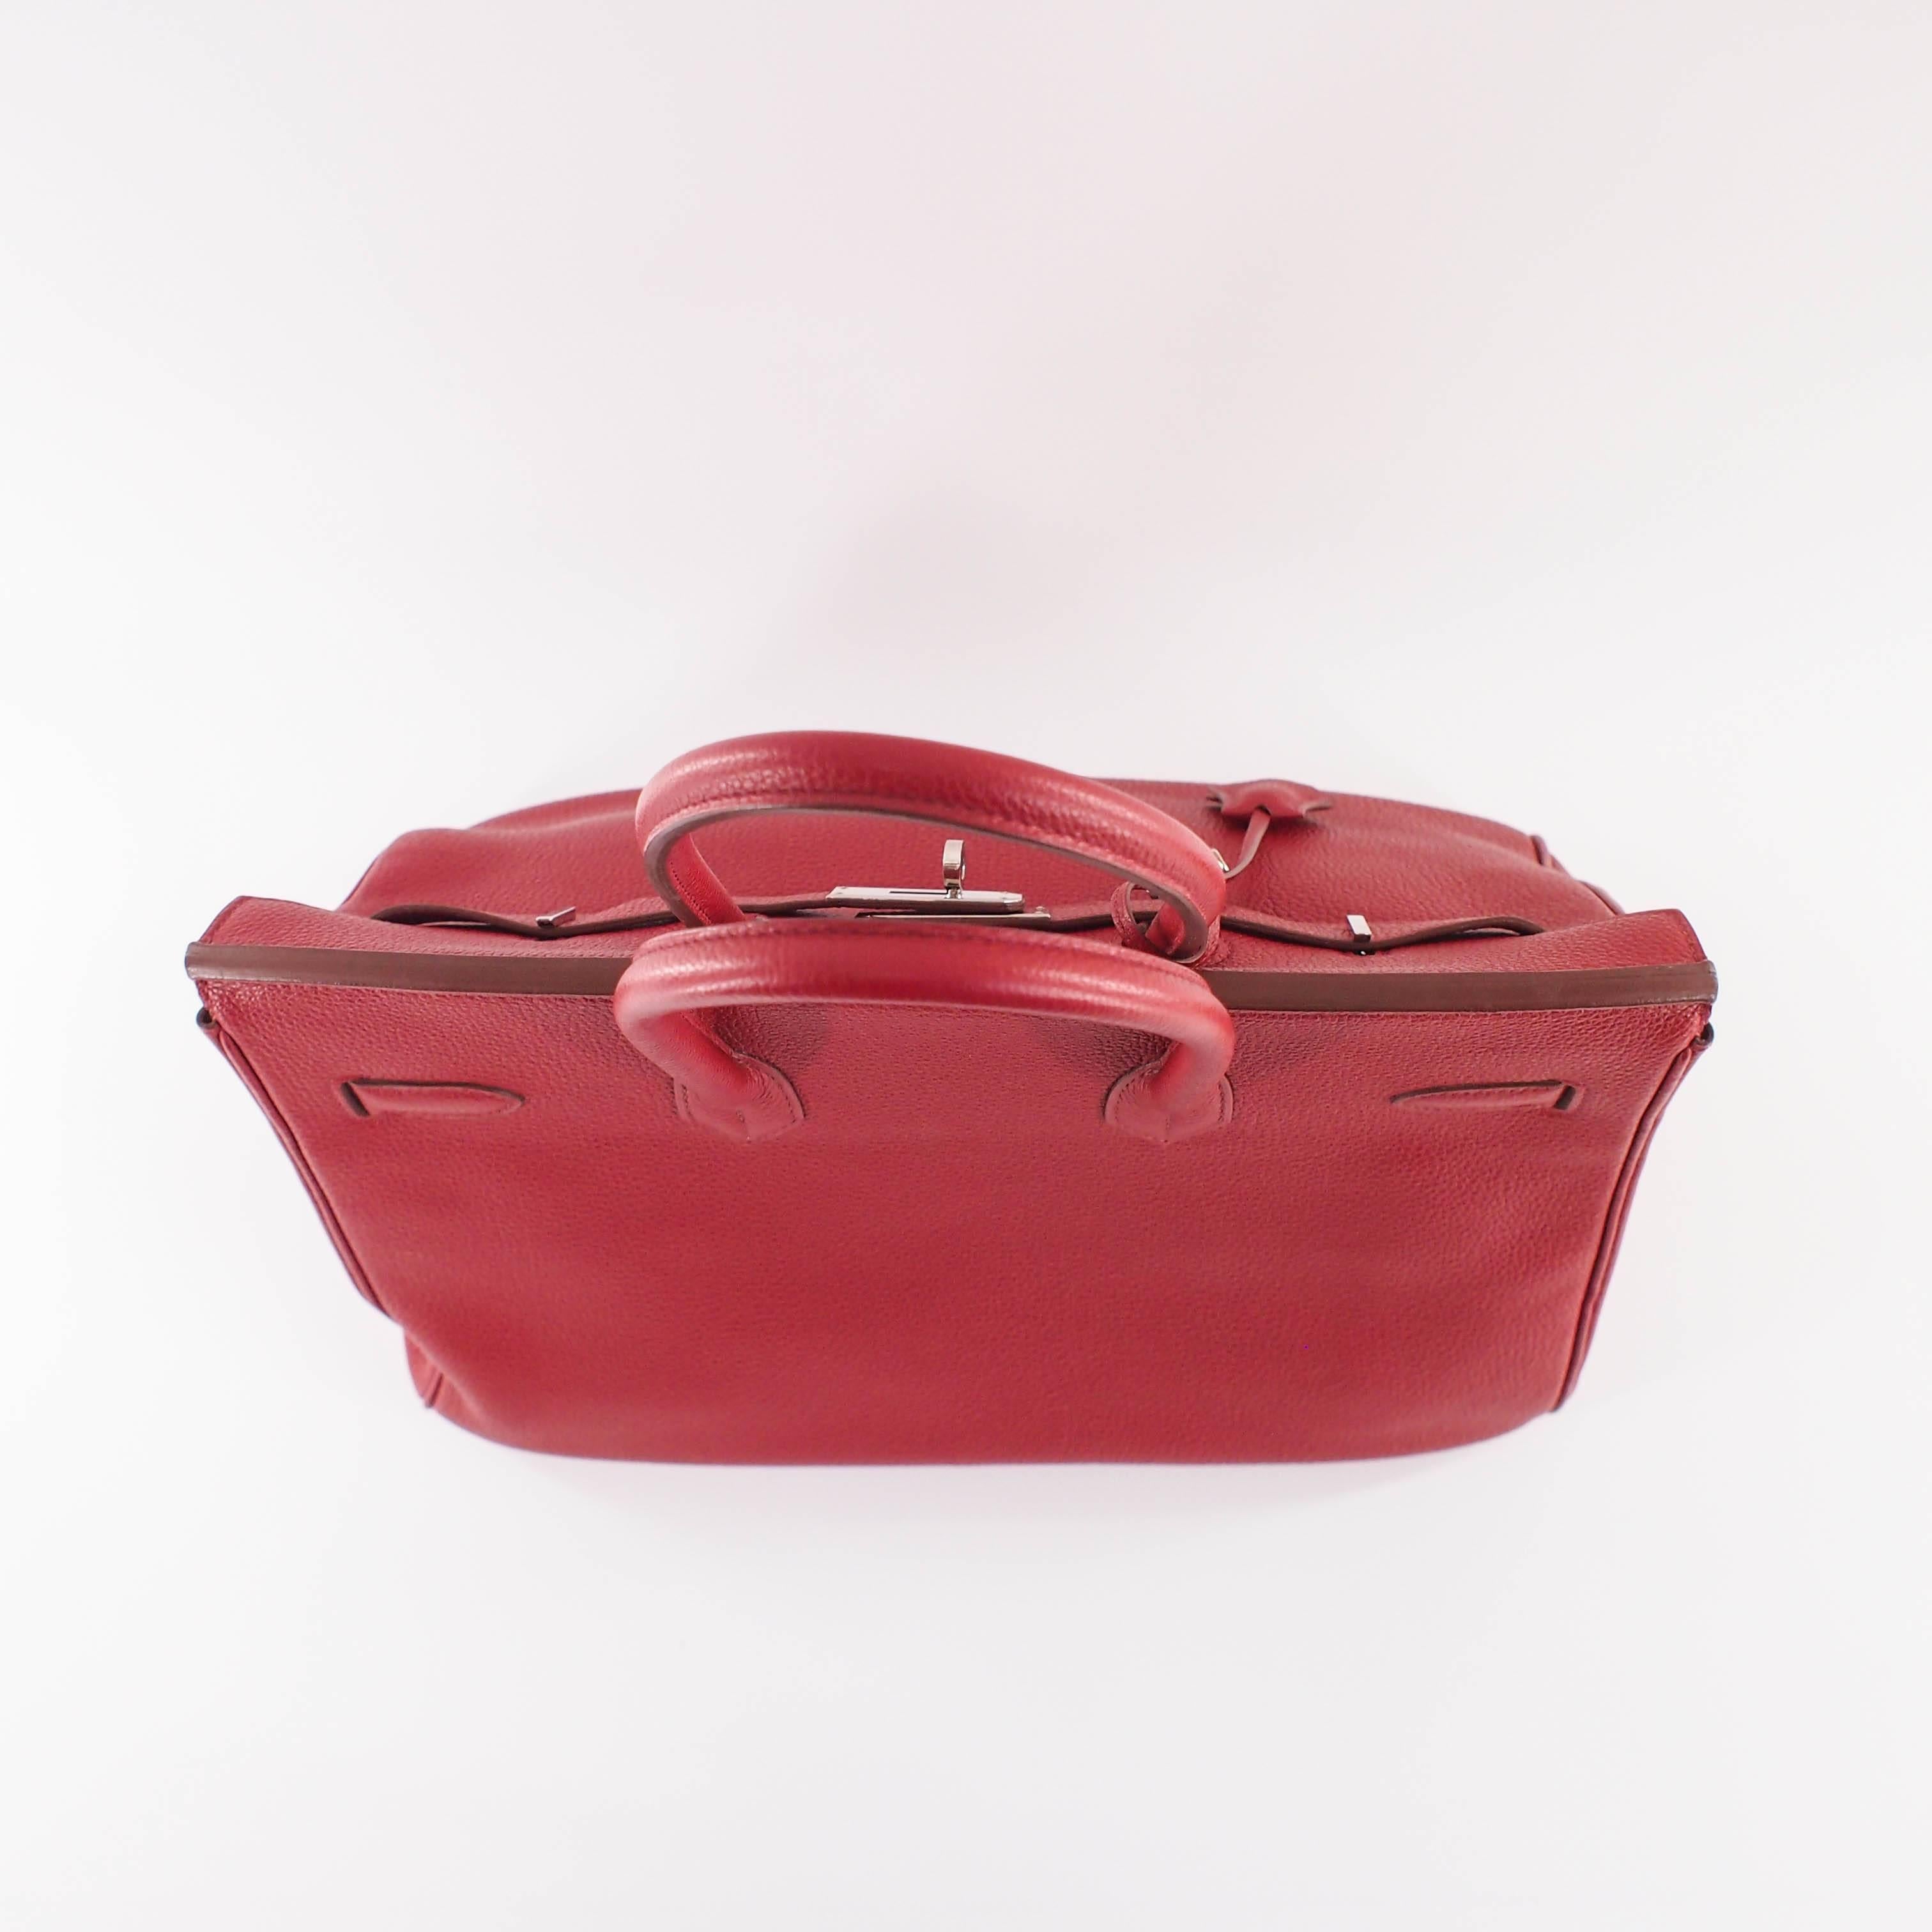 Hermes Birkin Handbag size 35 in Rouge Grenade With Palladium Hardware (PHW) 2